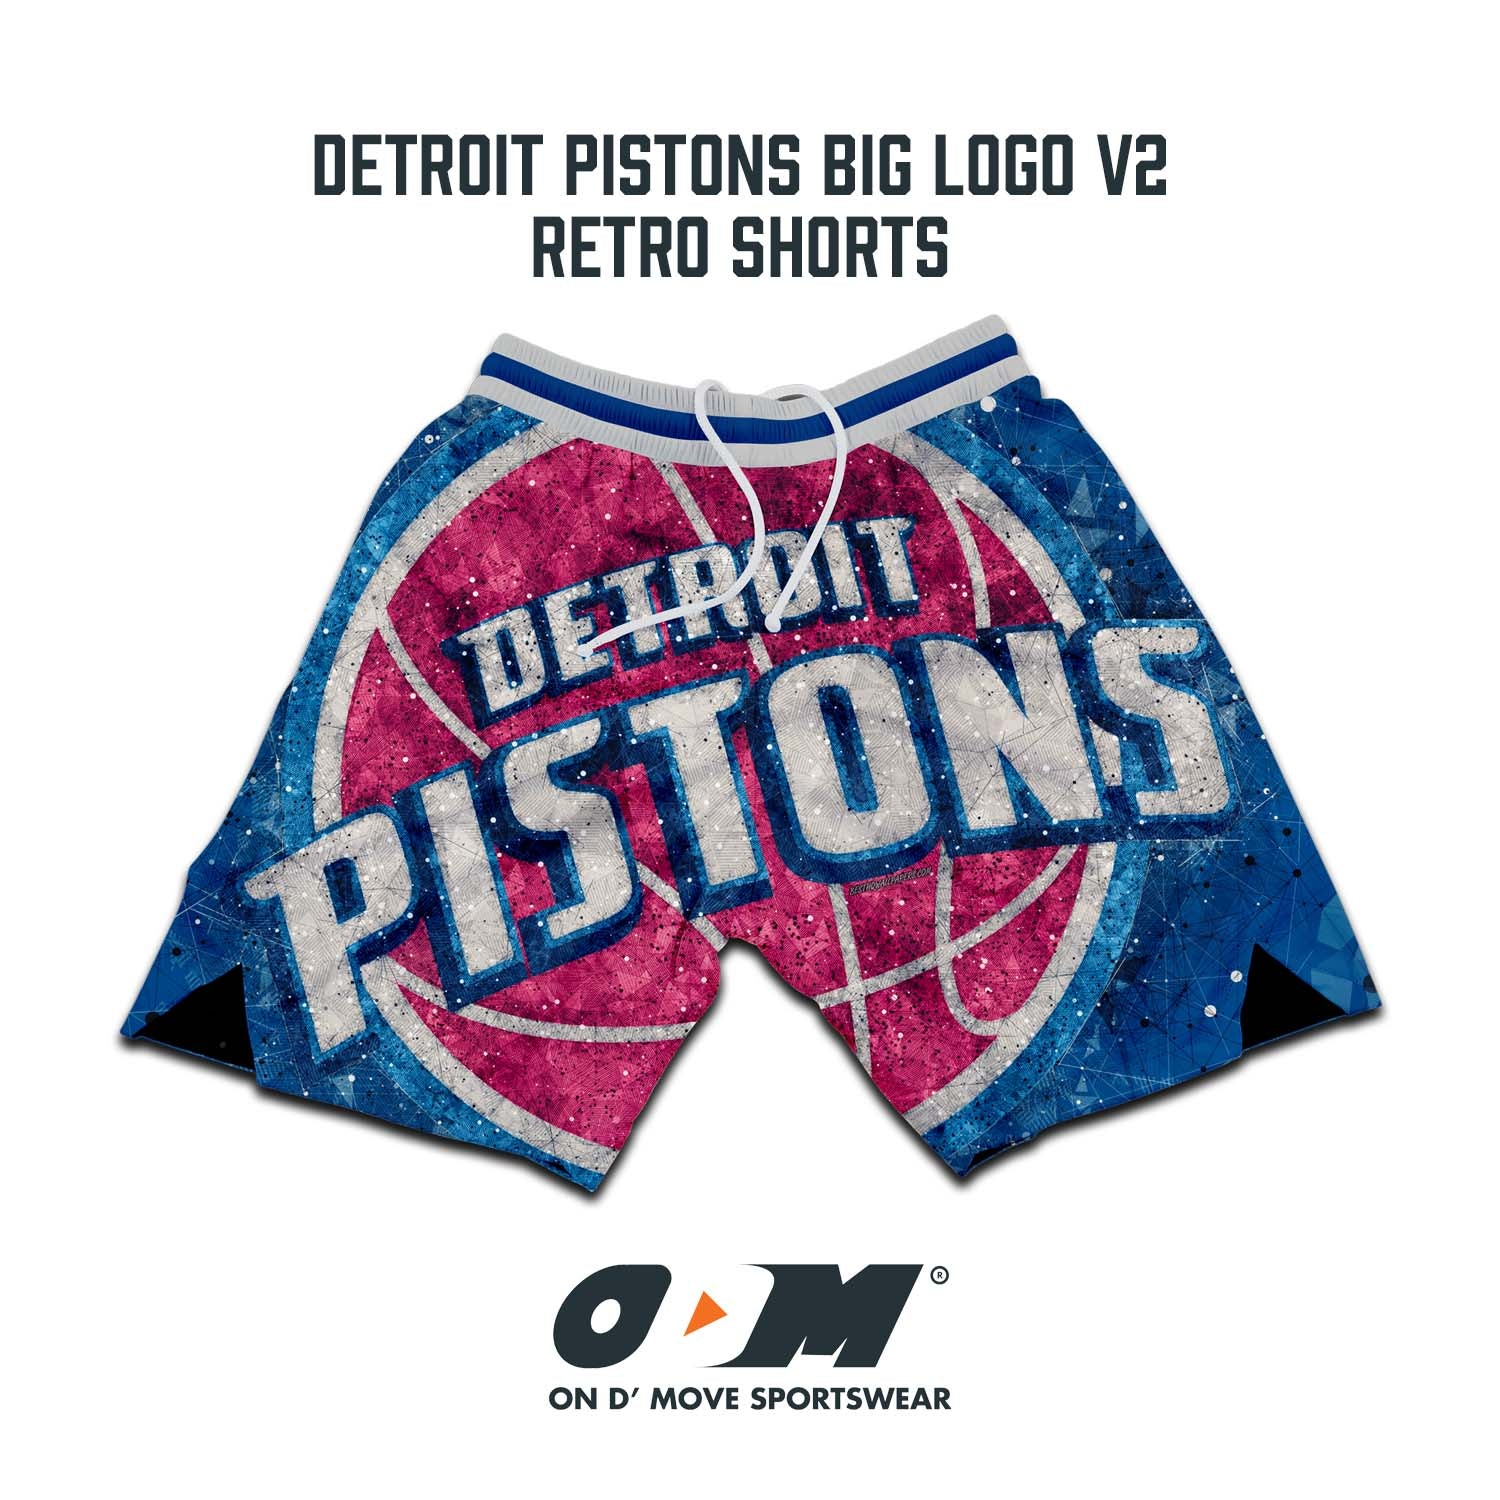 Detroit Pistons Big Logo v2 Retro Shorts